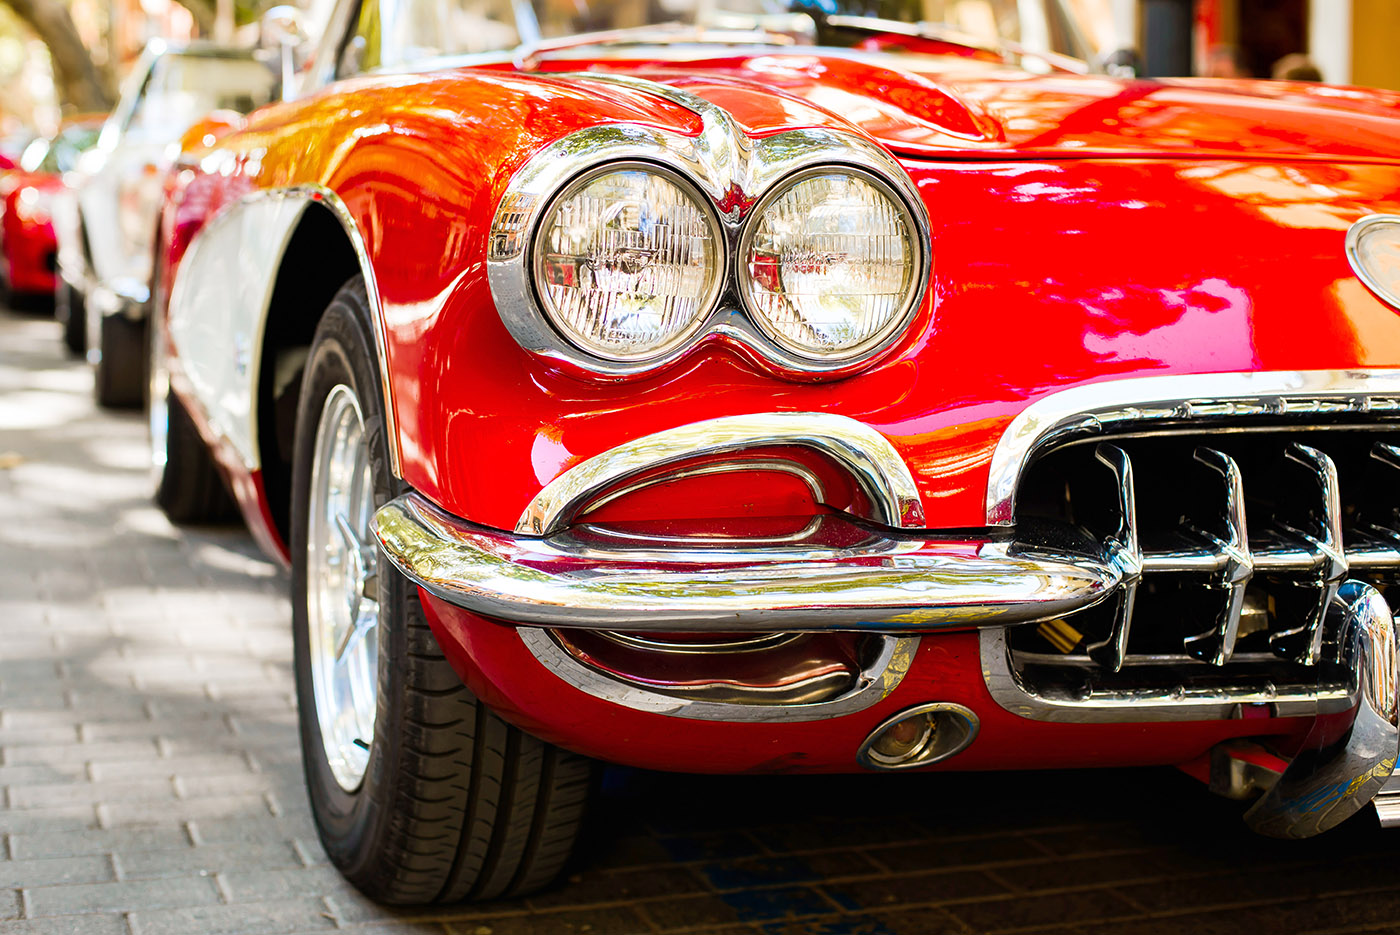 Classic red car